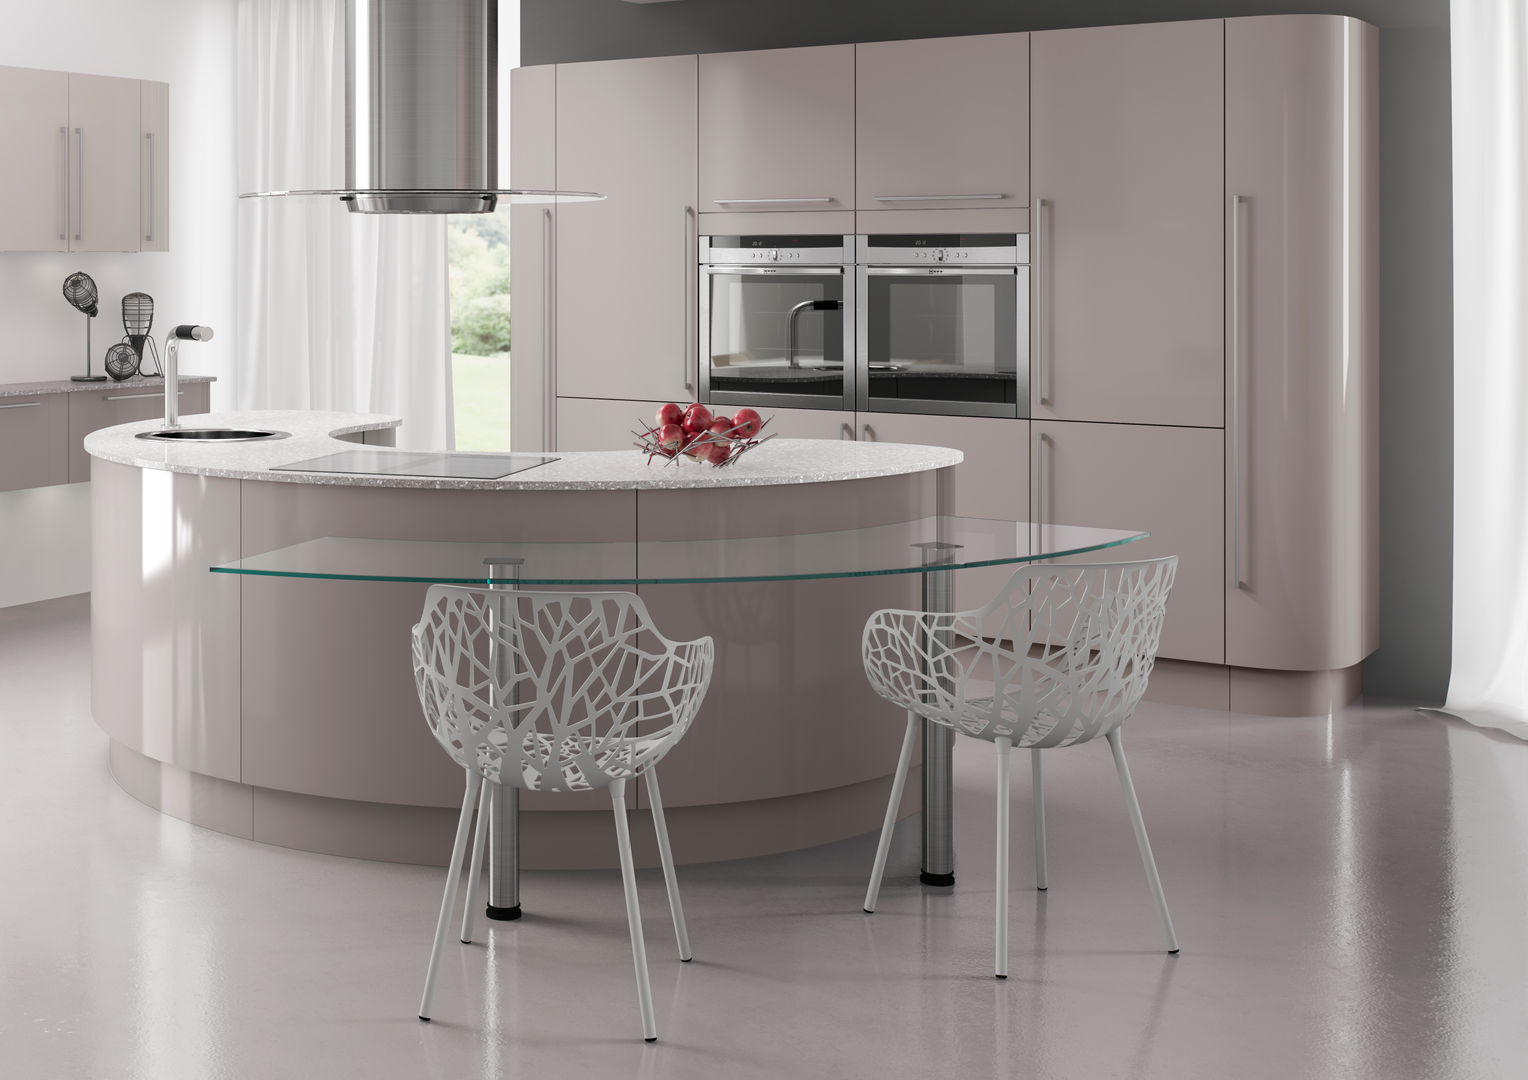 Nixon Gloss Island in Heritage Grey | Sigma 3 Kitchens Sigma 3 Kitchens Dapur Modern Cabinets & shelves